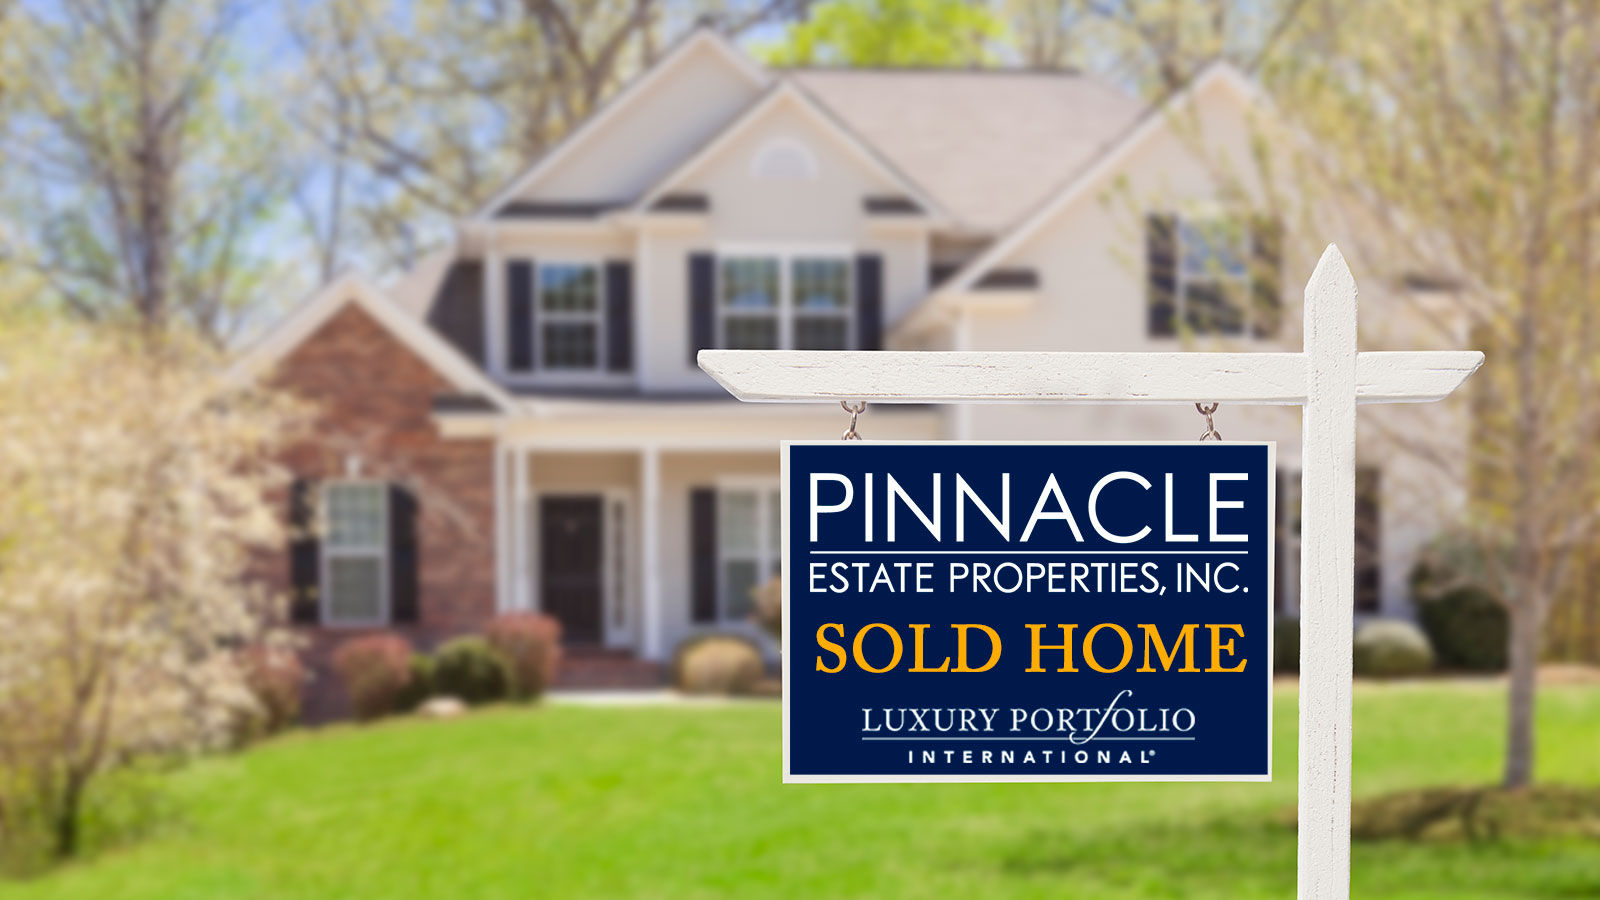 Pinnacle Real Estate Sold Home